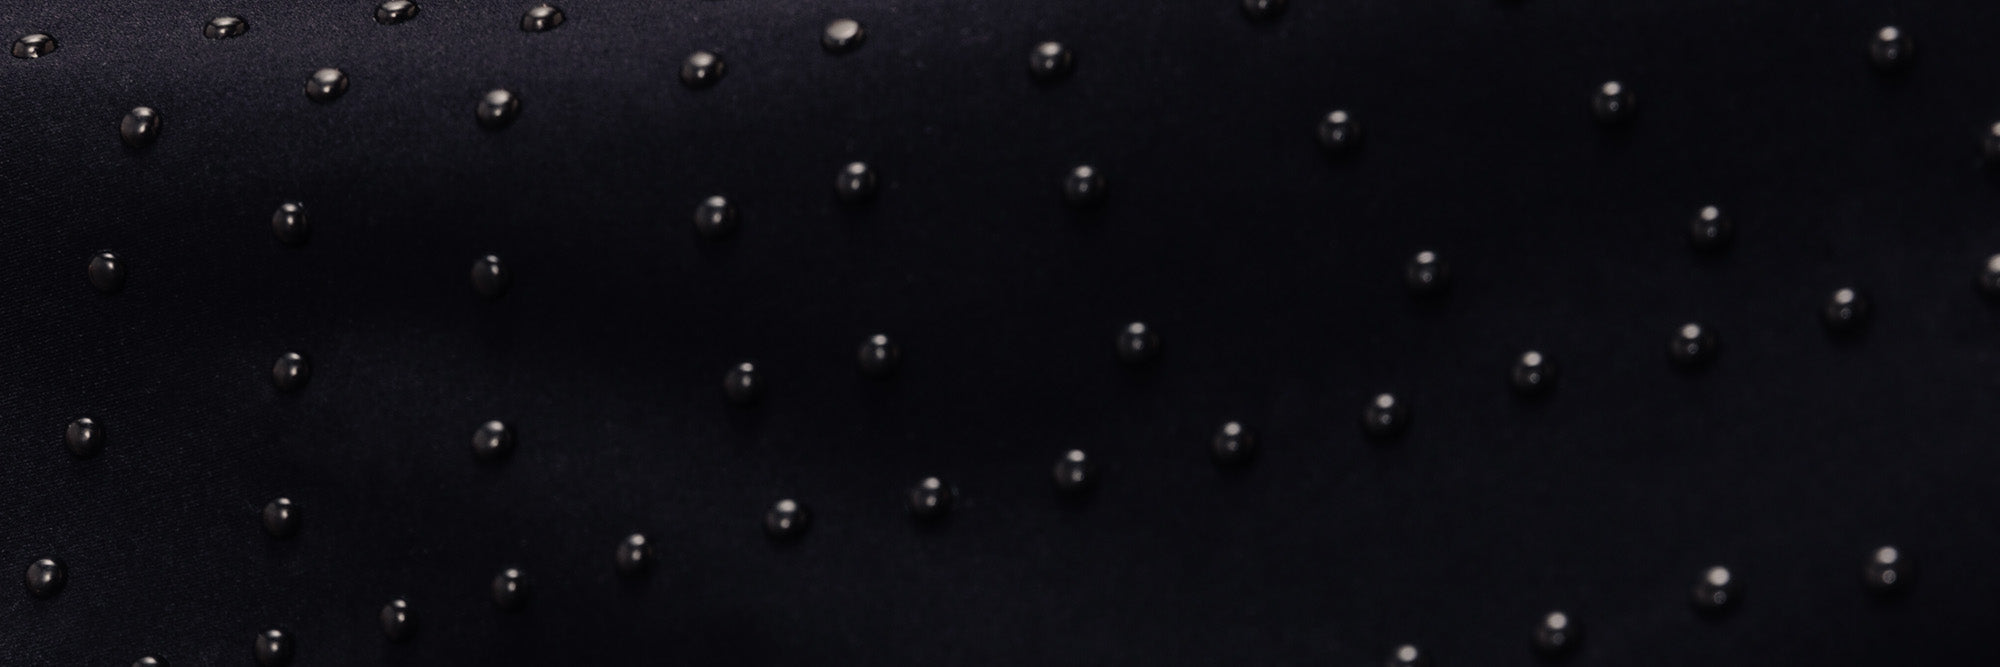 MicroPerles on black fabric